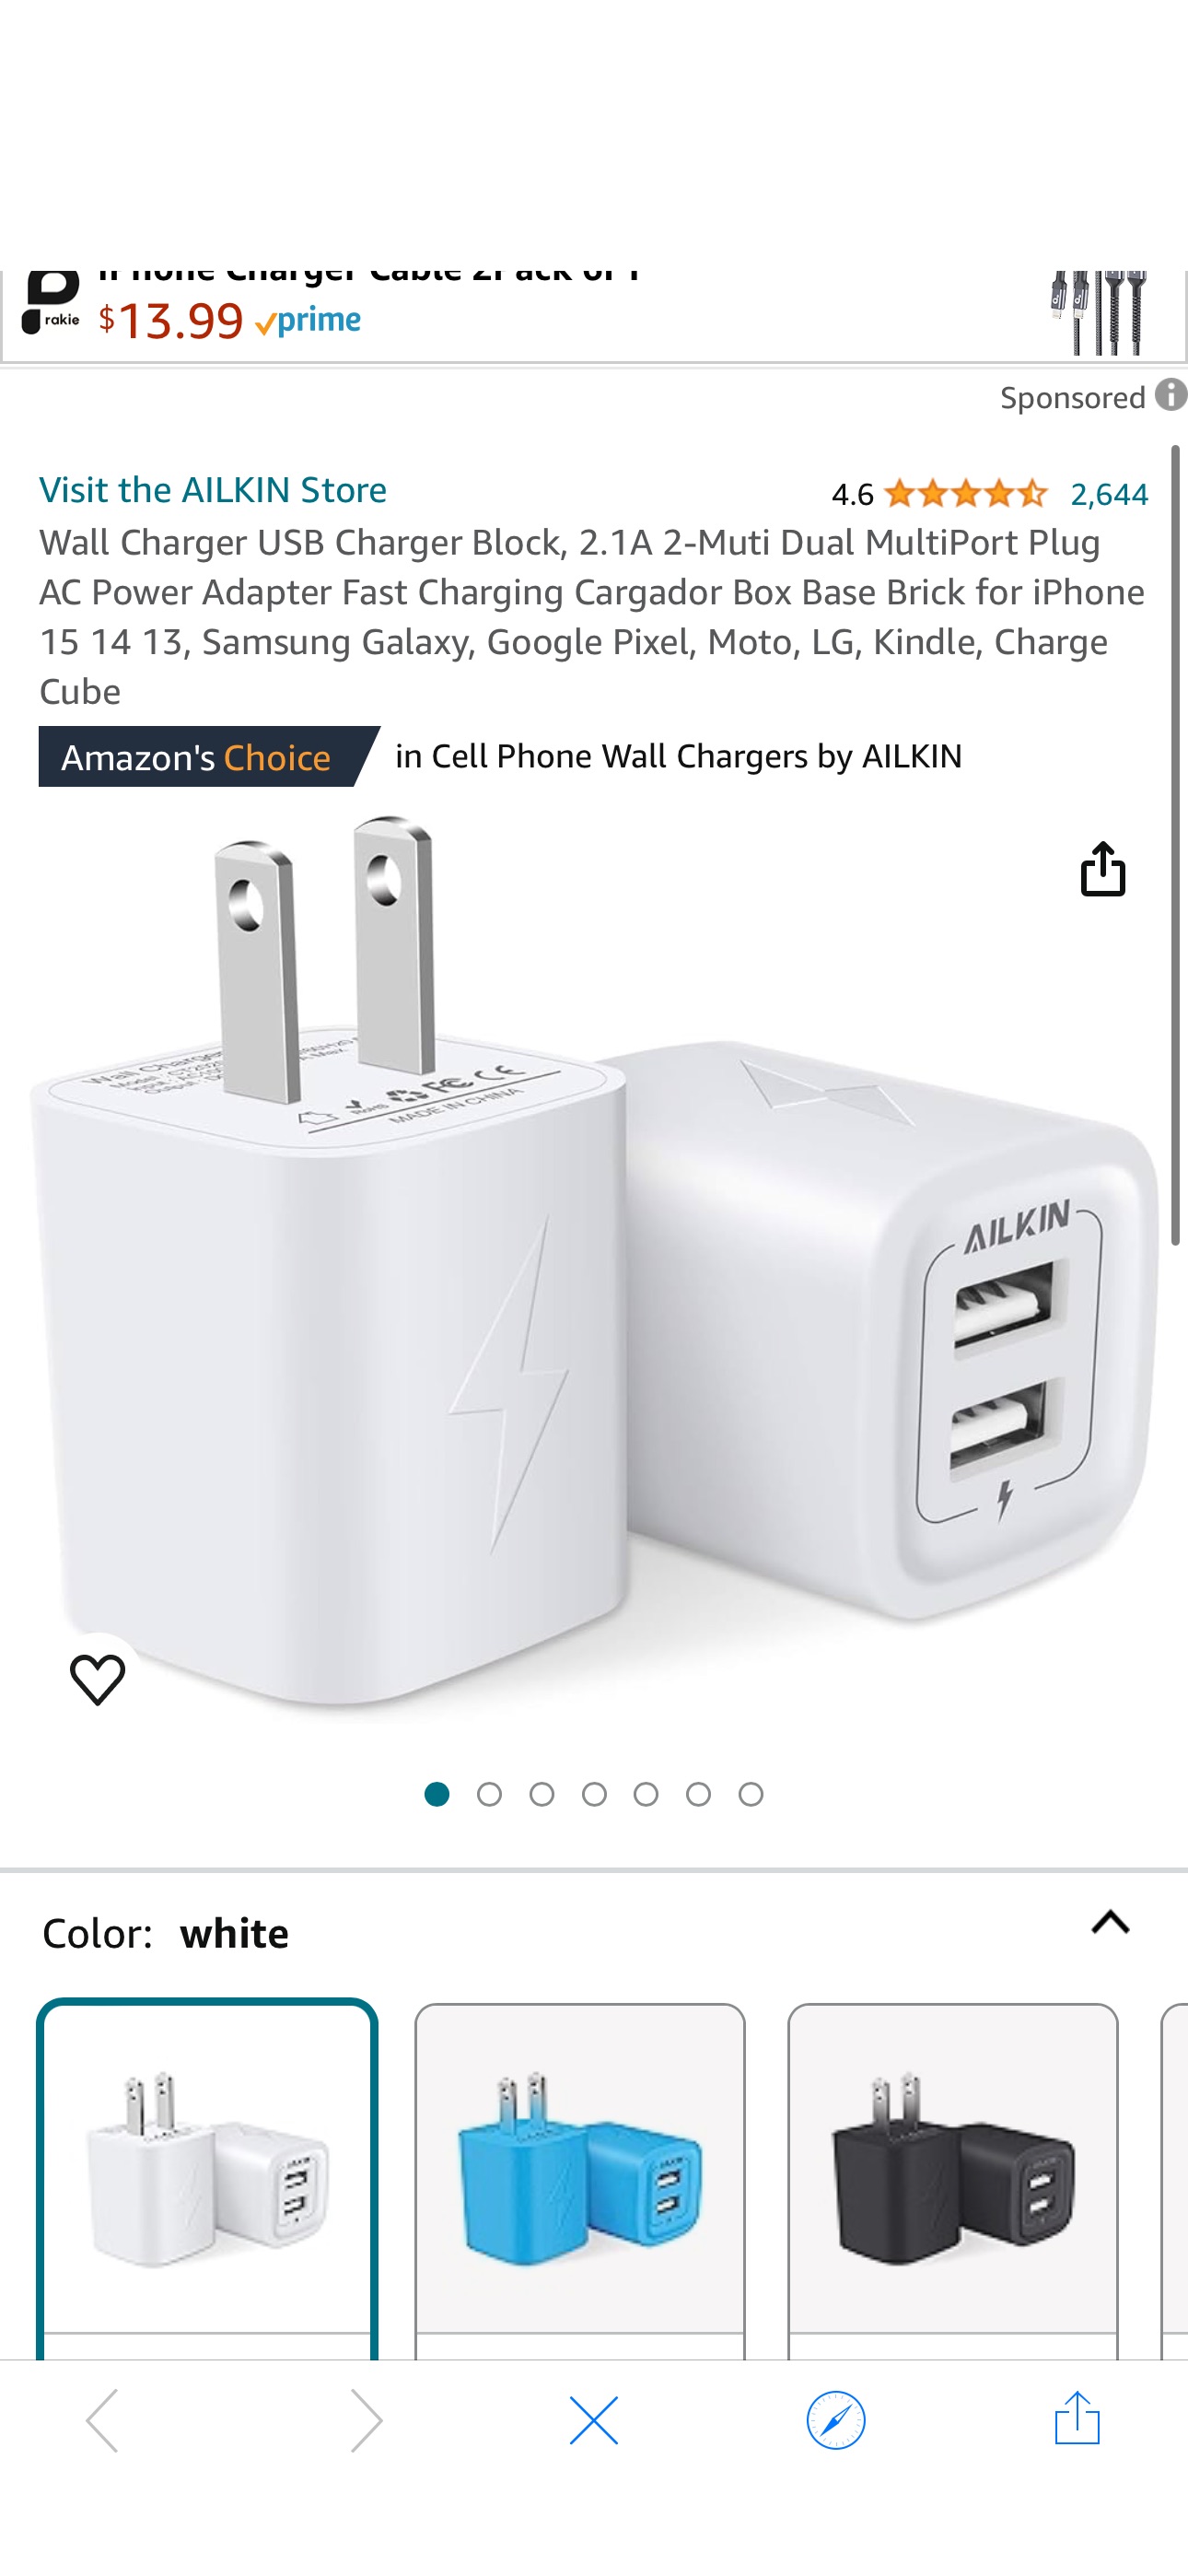 Amazon.com: Wall Charger USB Charger Block, 2.1A 2-Muti Dual MultiPort Plug AC Power Adapter Fast Charging Cargador Box Base Brick for iPhone 15 14 13, Samsung Galaxy, Google Pixel, Moto, LG, Kindle, 